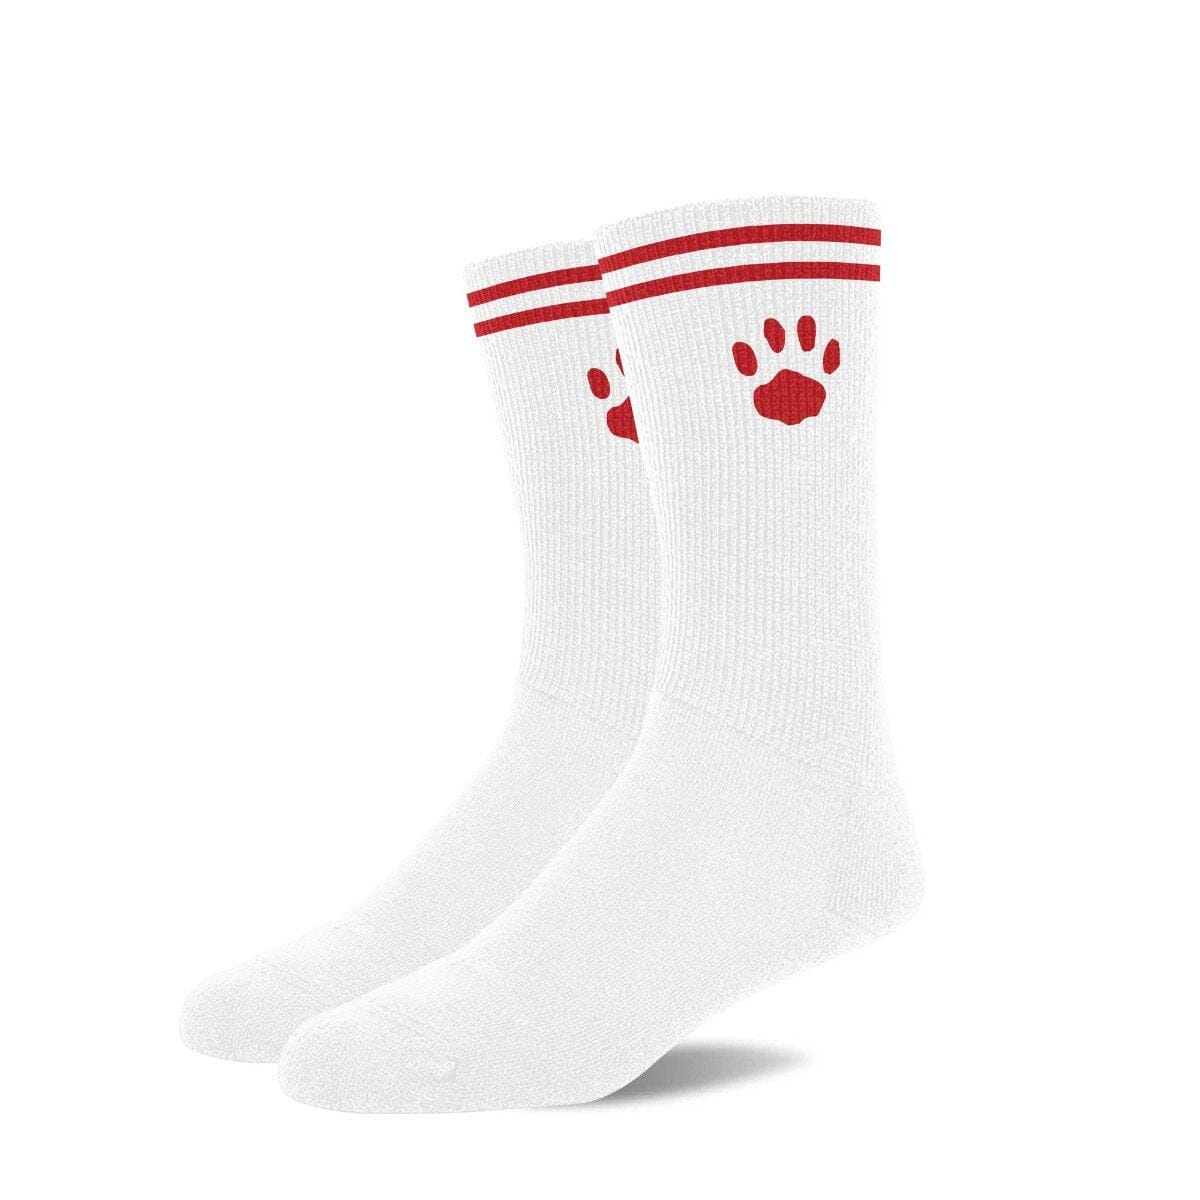 Prowler RED Crew Socke Weiß/Rot